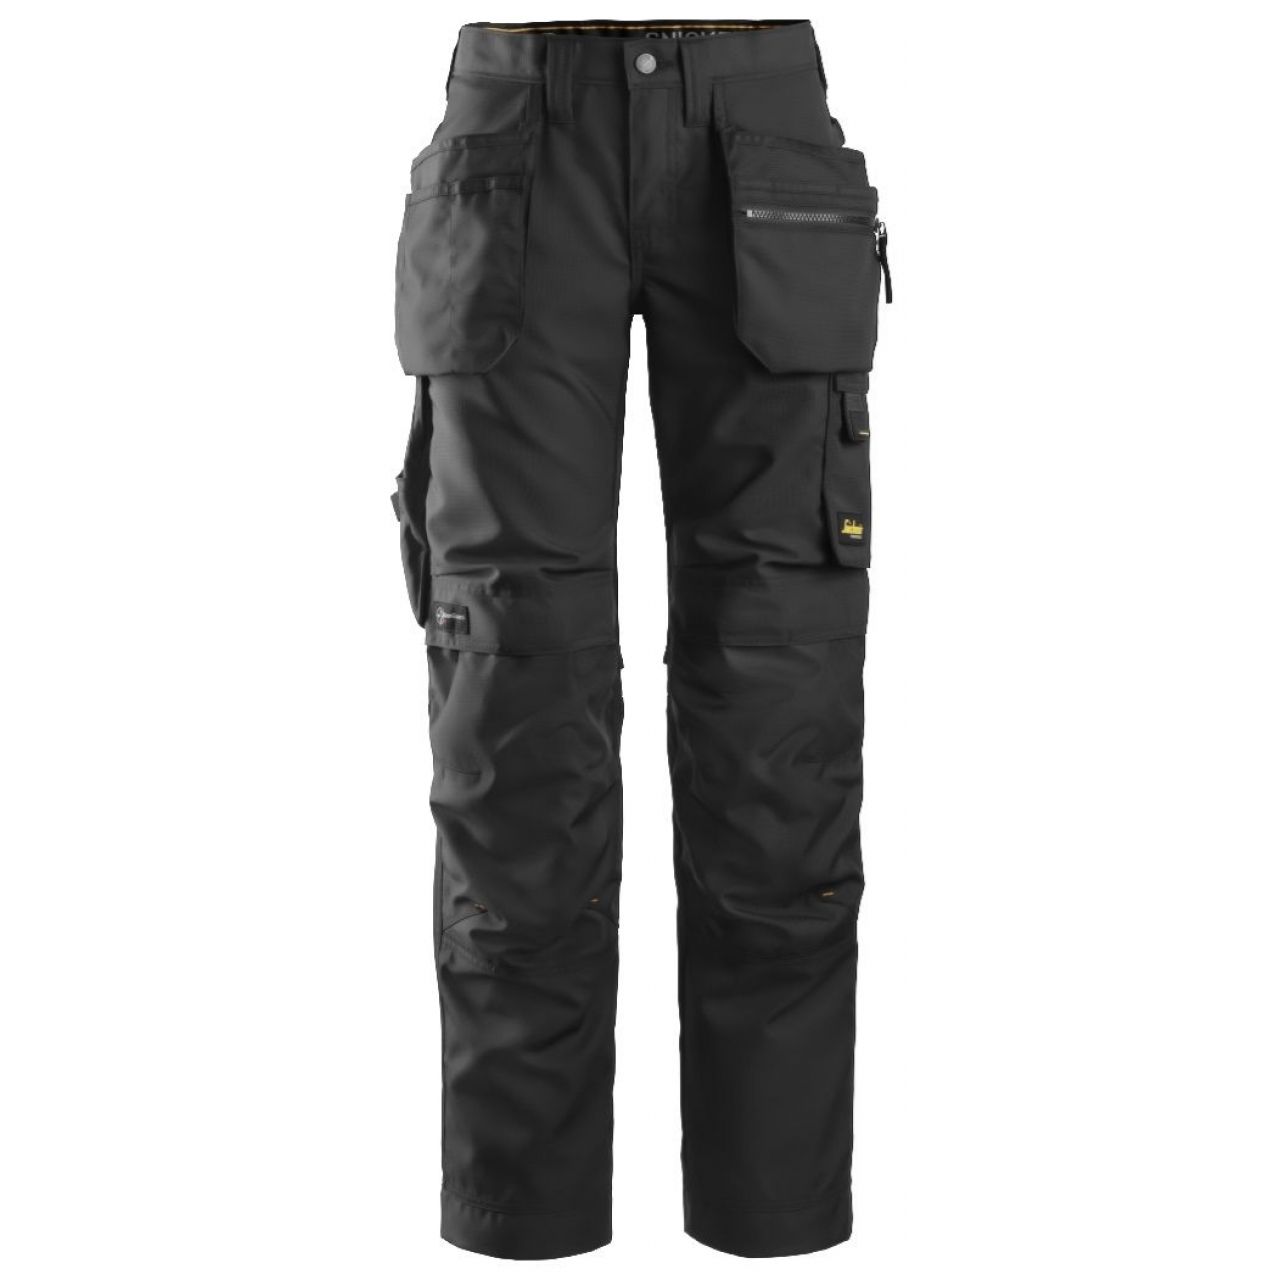 Pantalon de mujer AllroundWork+ con bolsillos flotantes negro talla 044